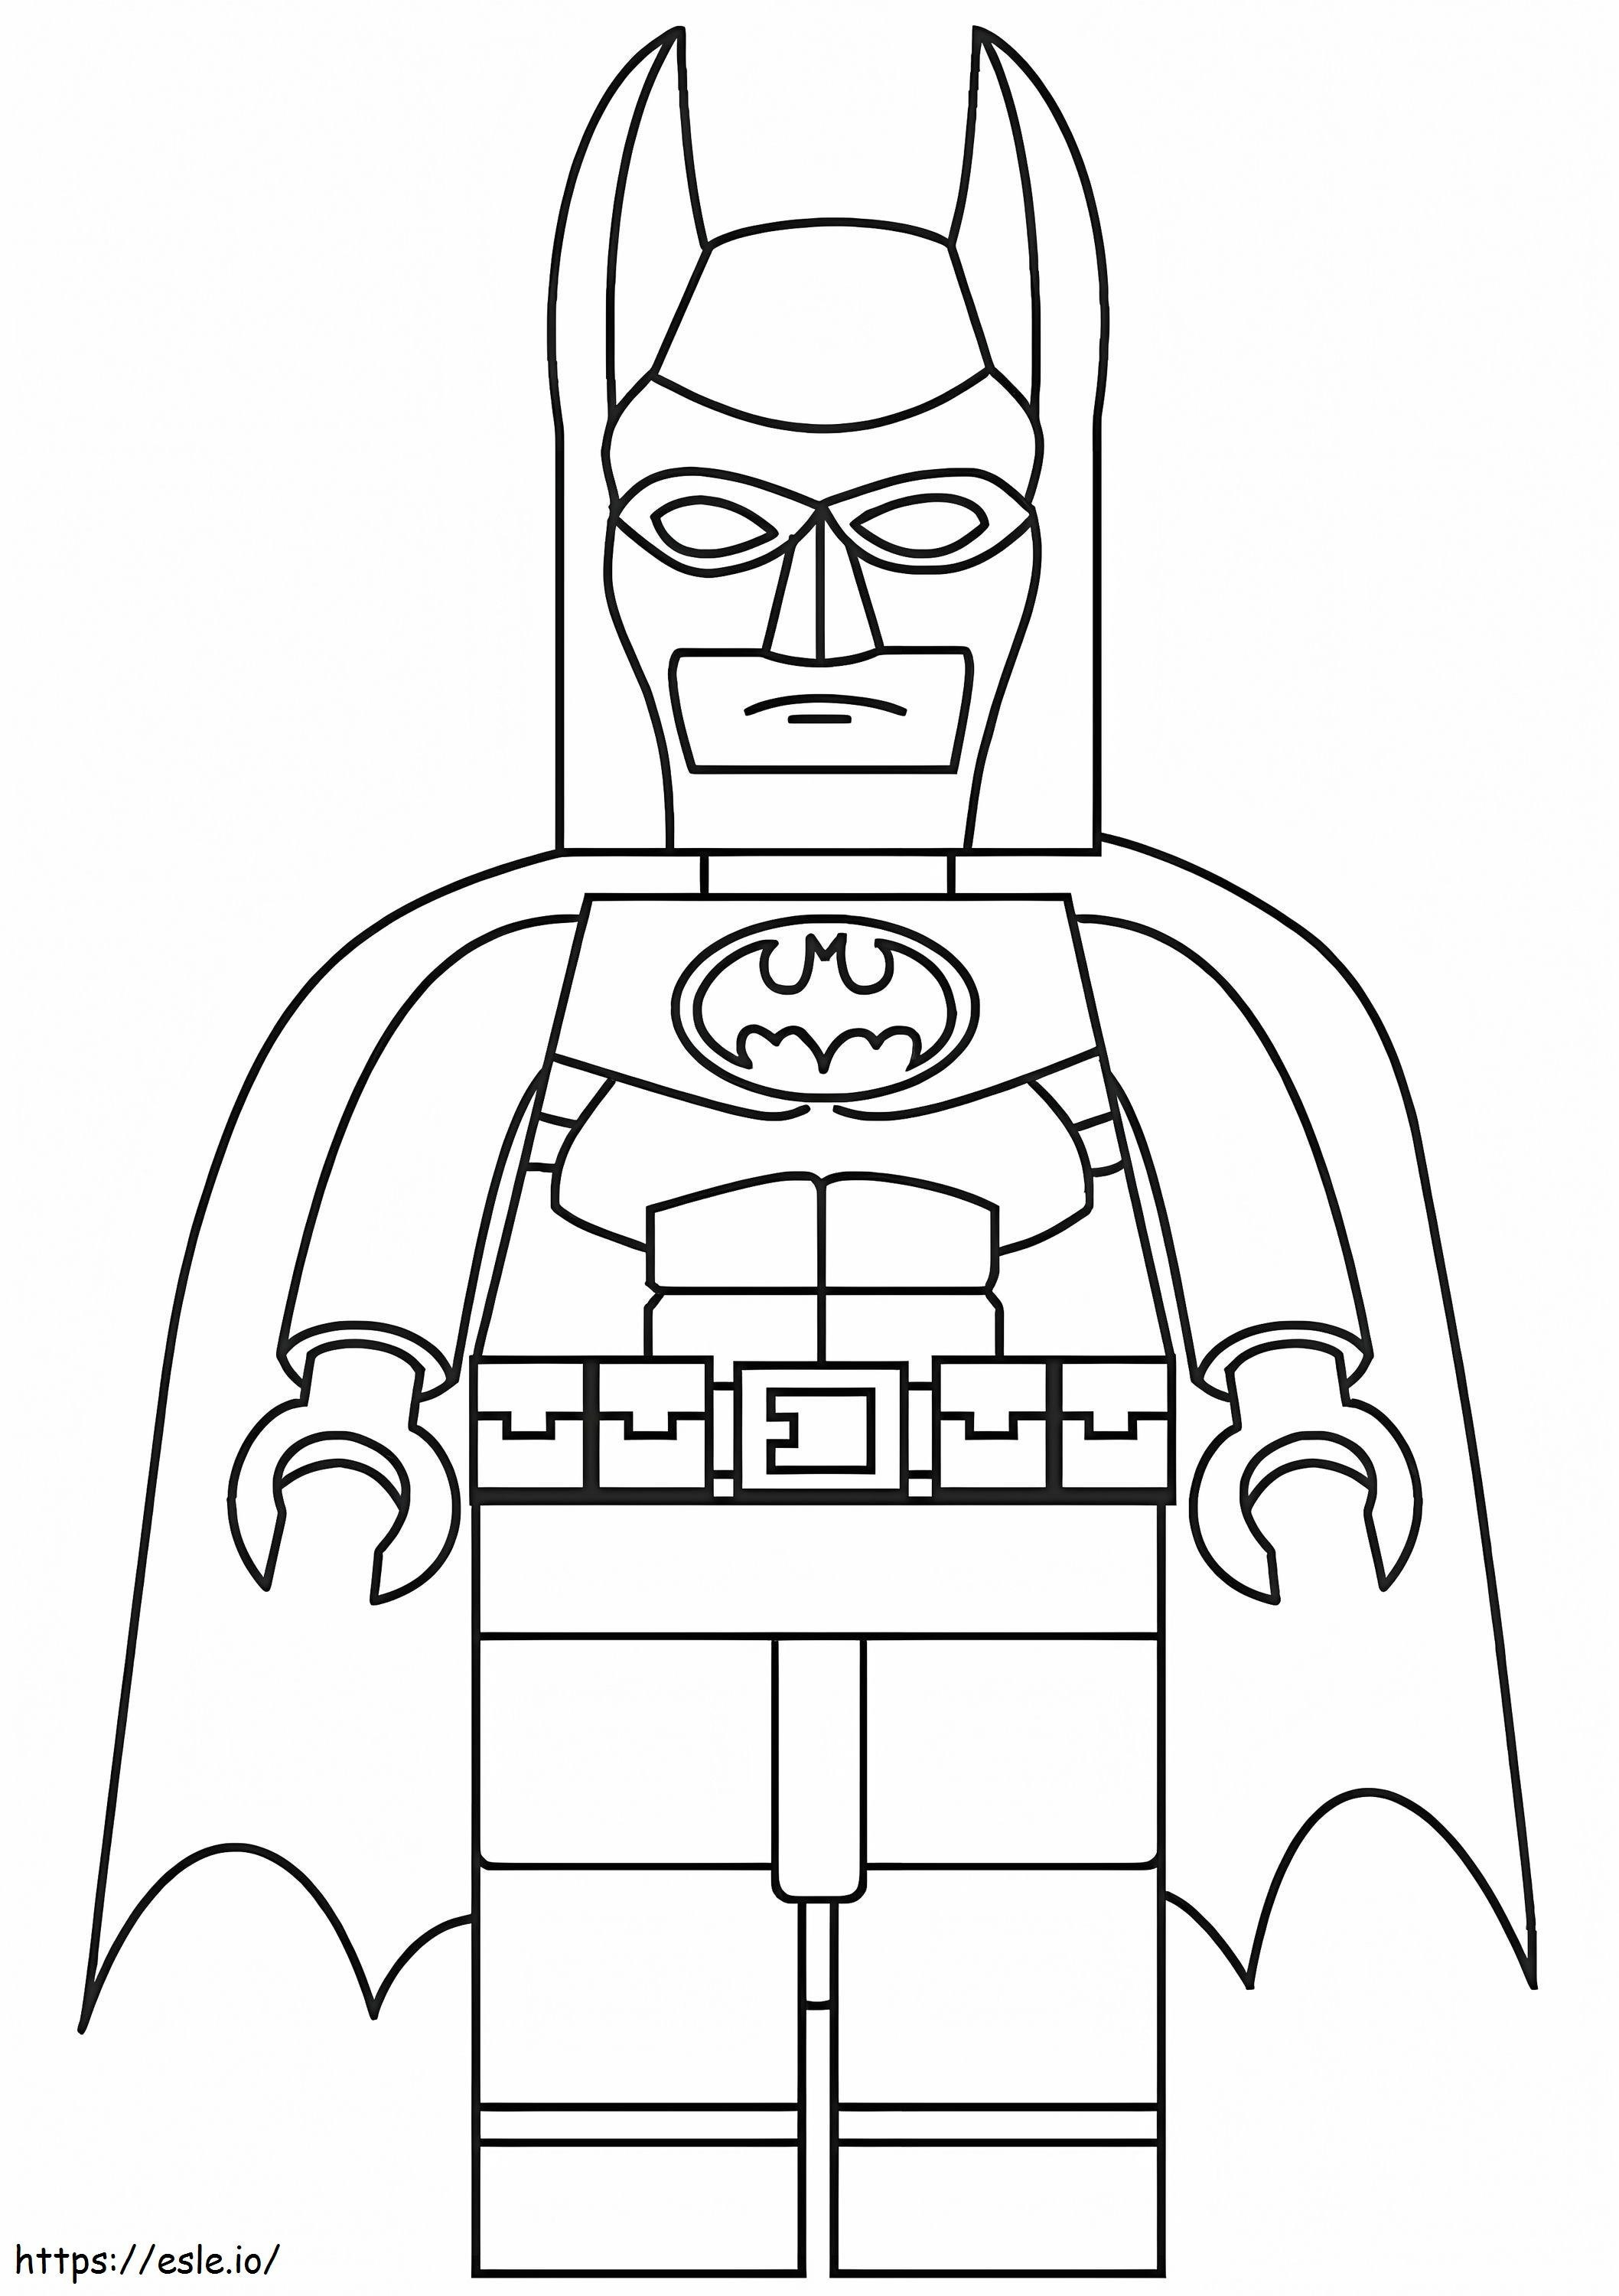 Coloriage Lego Batman 3 à imprimer dessin